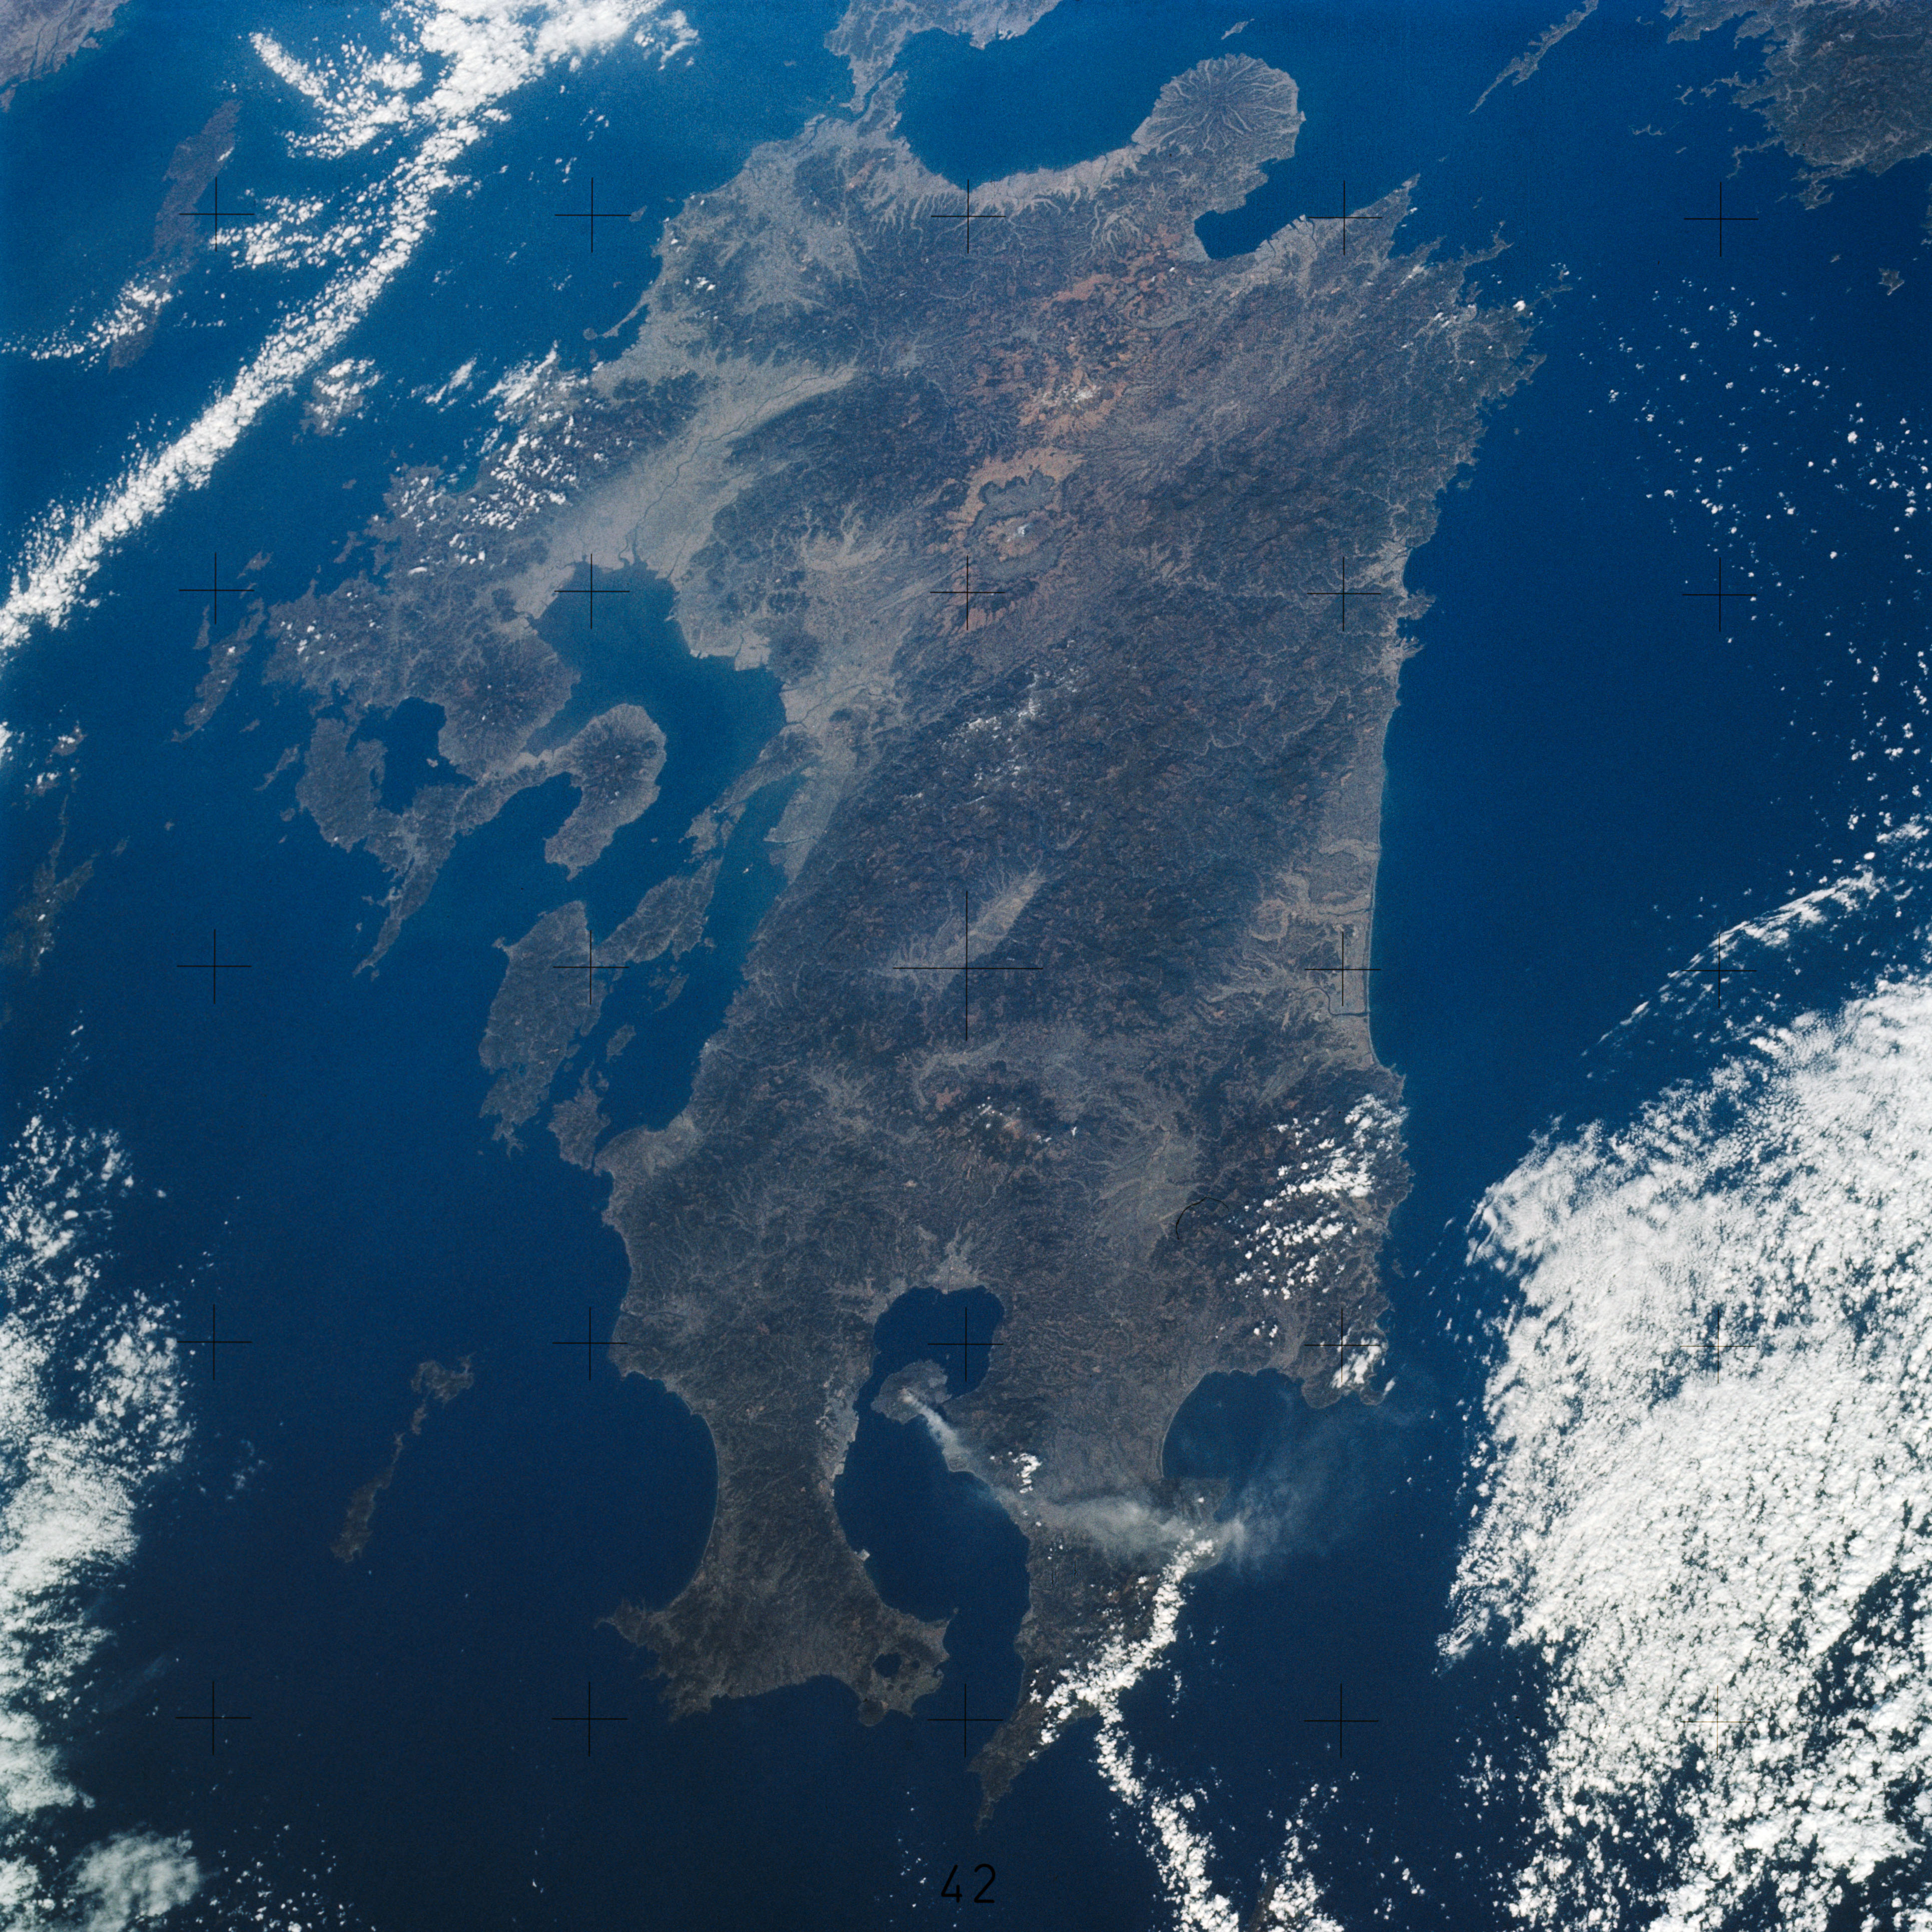 Skylab 4 astronaut photography of the Japanese island of Kyushu